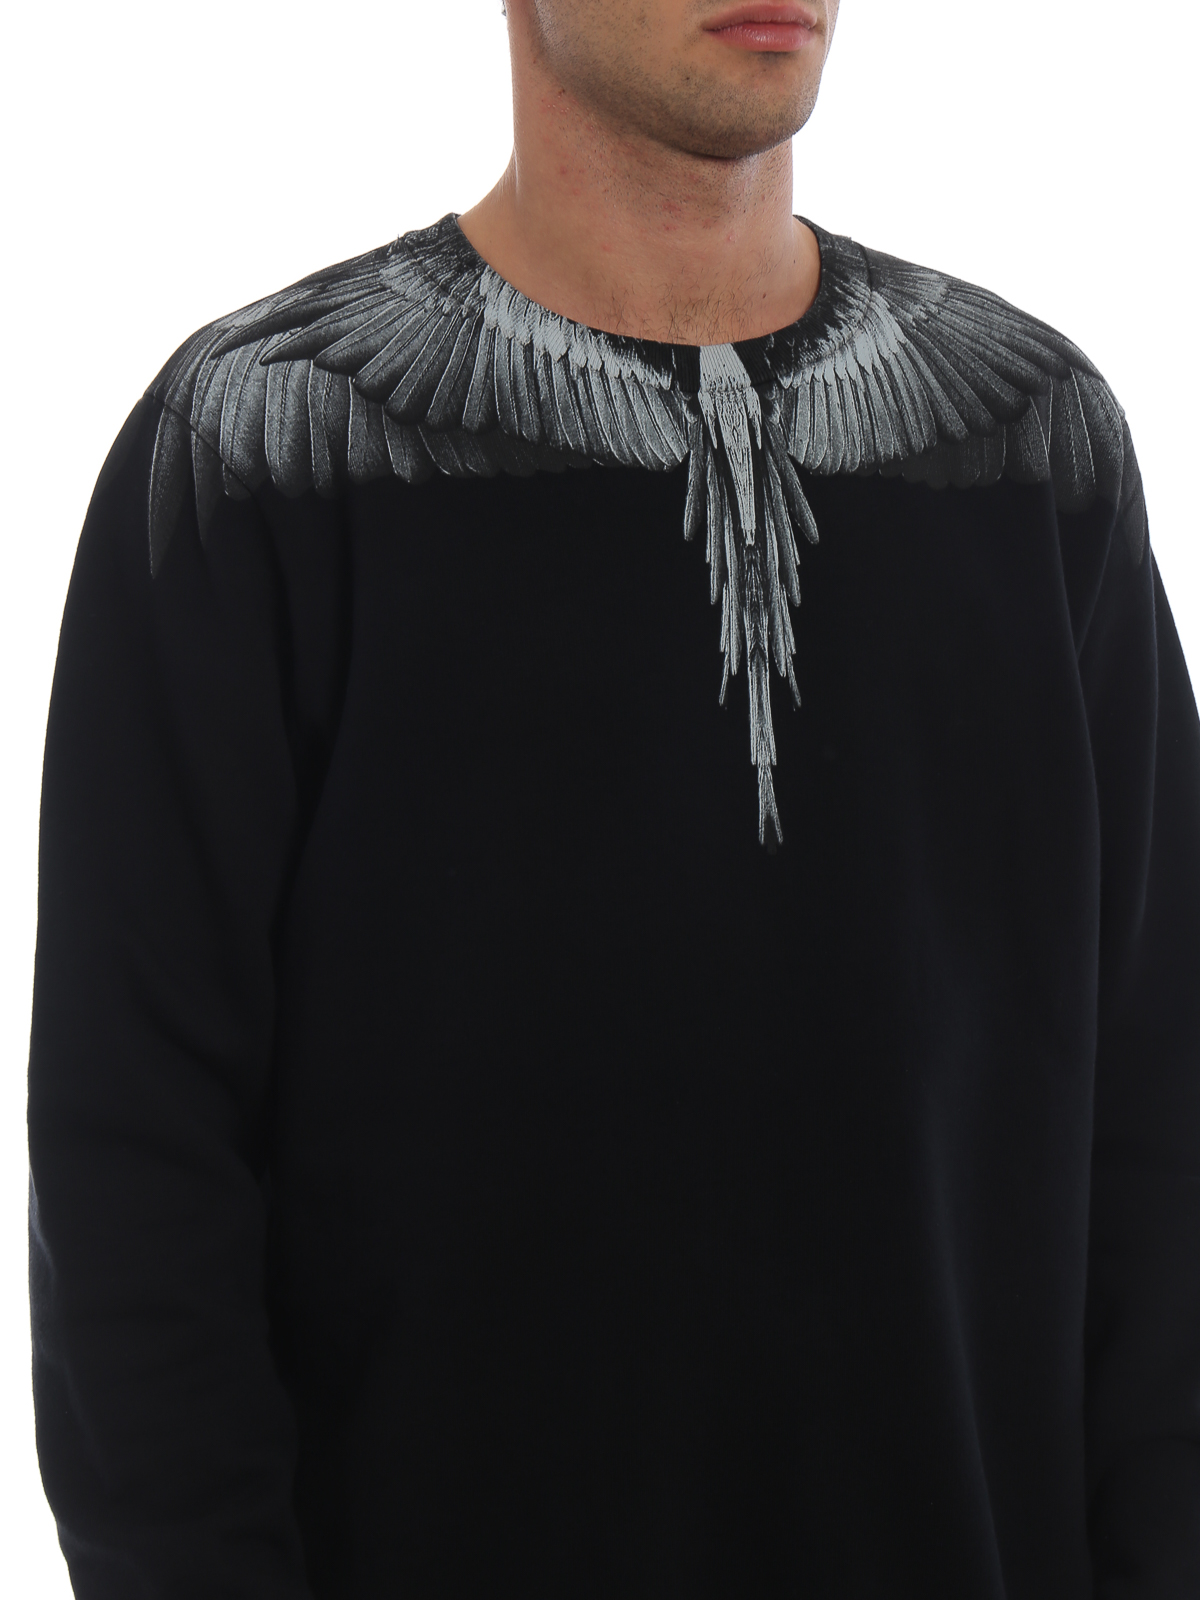 Sweatshirts & Sweaters Burlon - and light grey Wings sweatshirt -